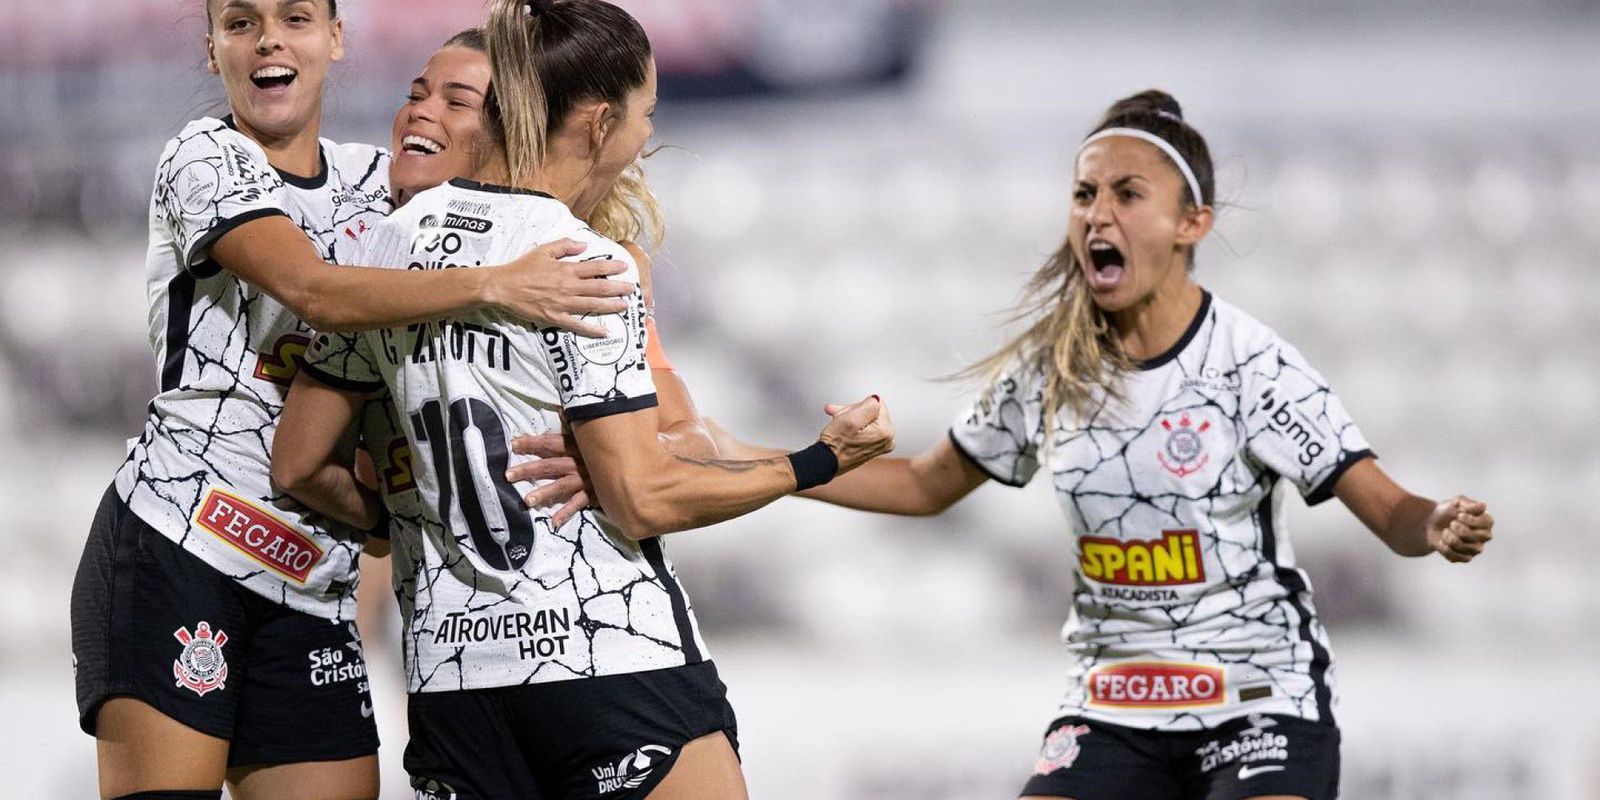 Corinthians beats Alianza to advance to women's Libertadores semifinal